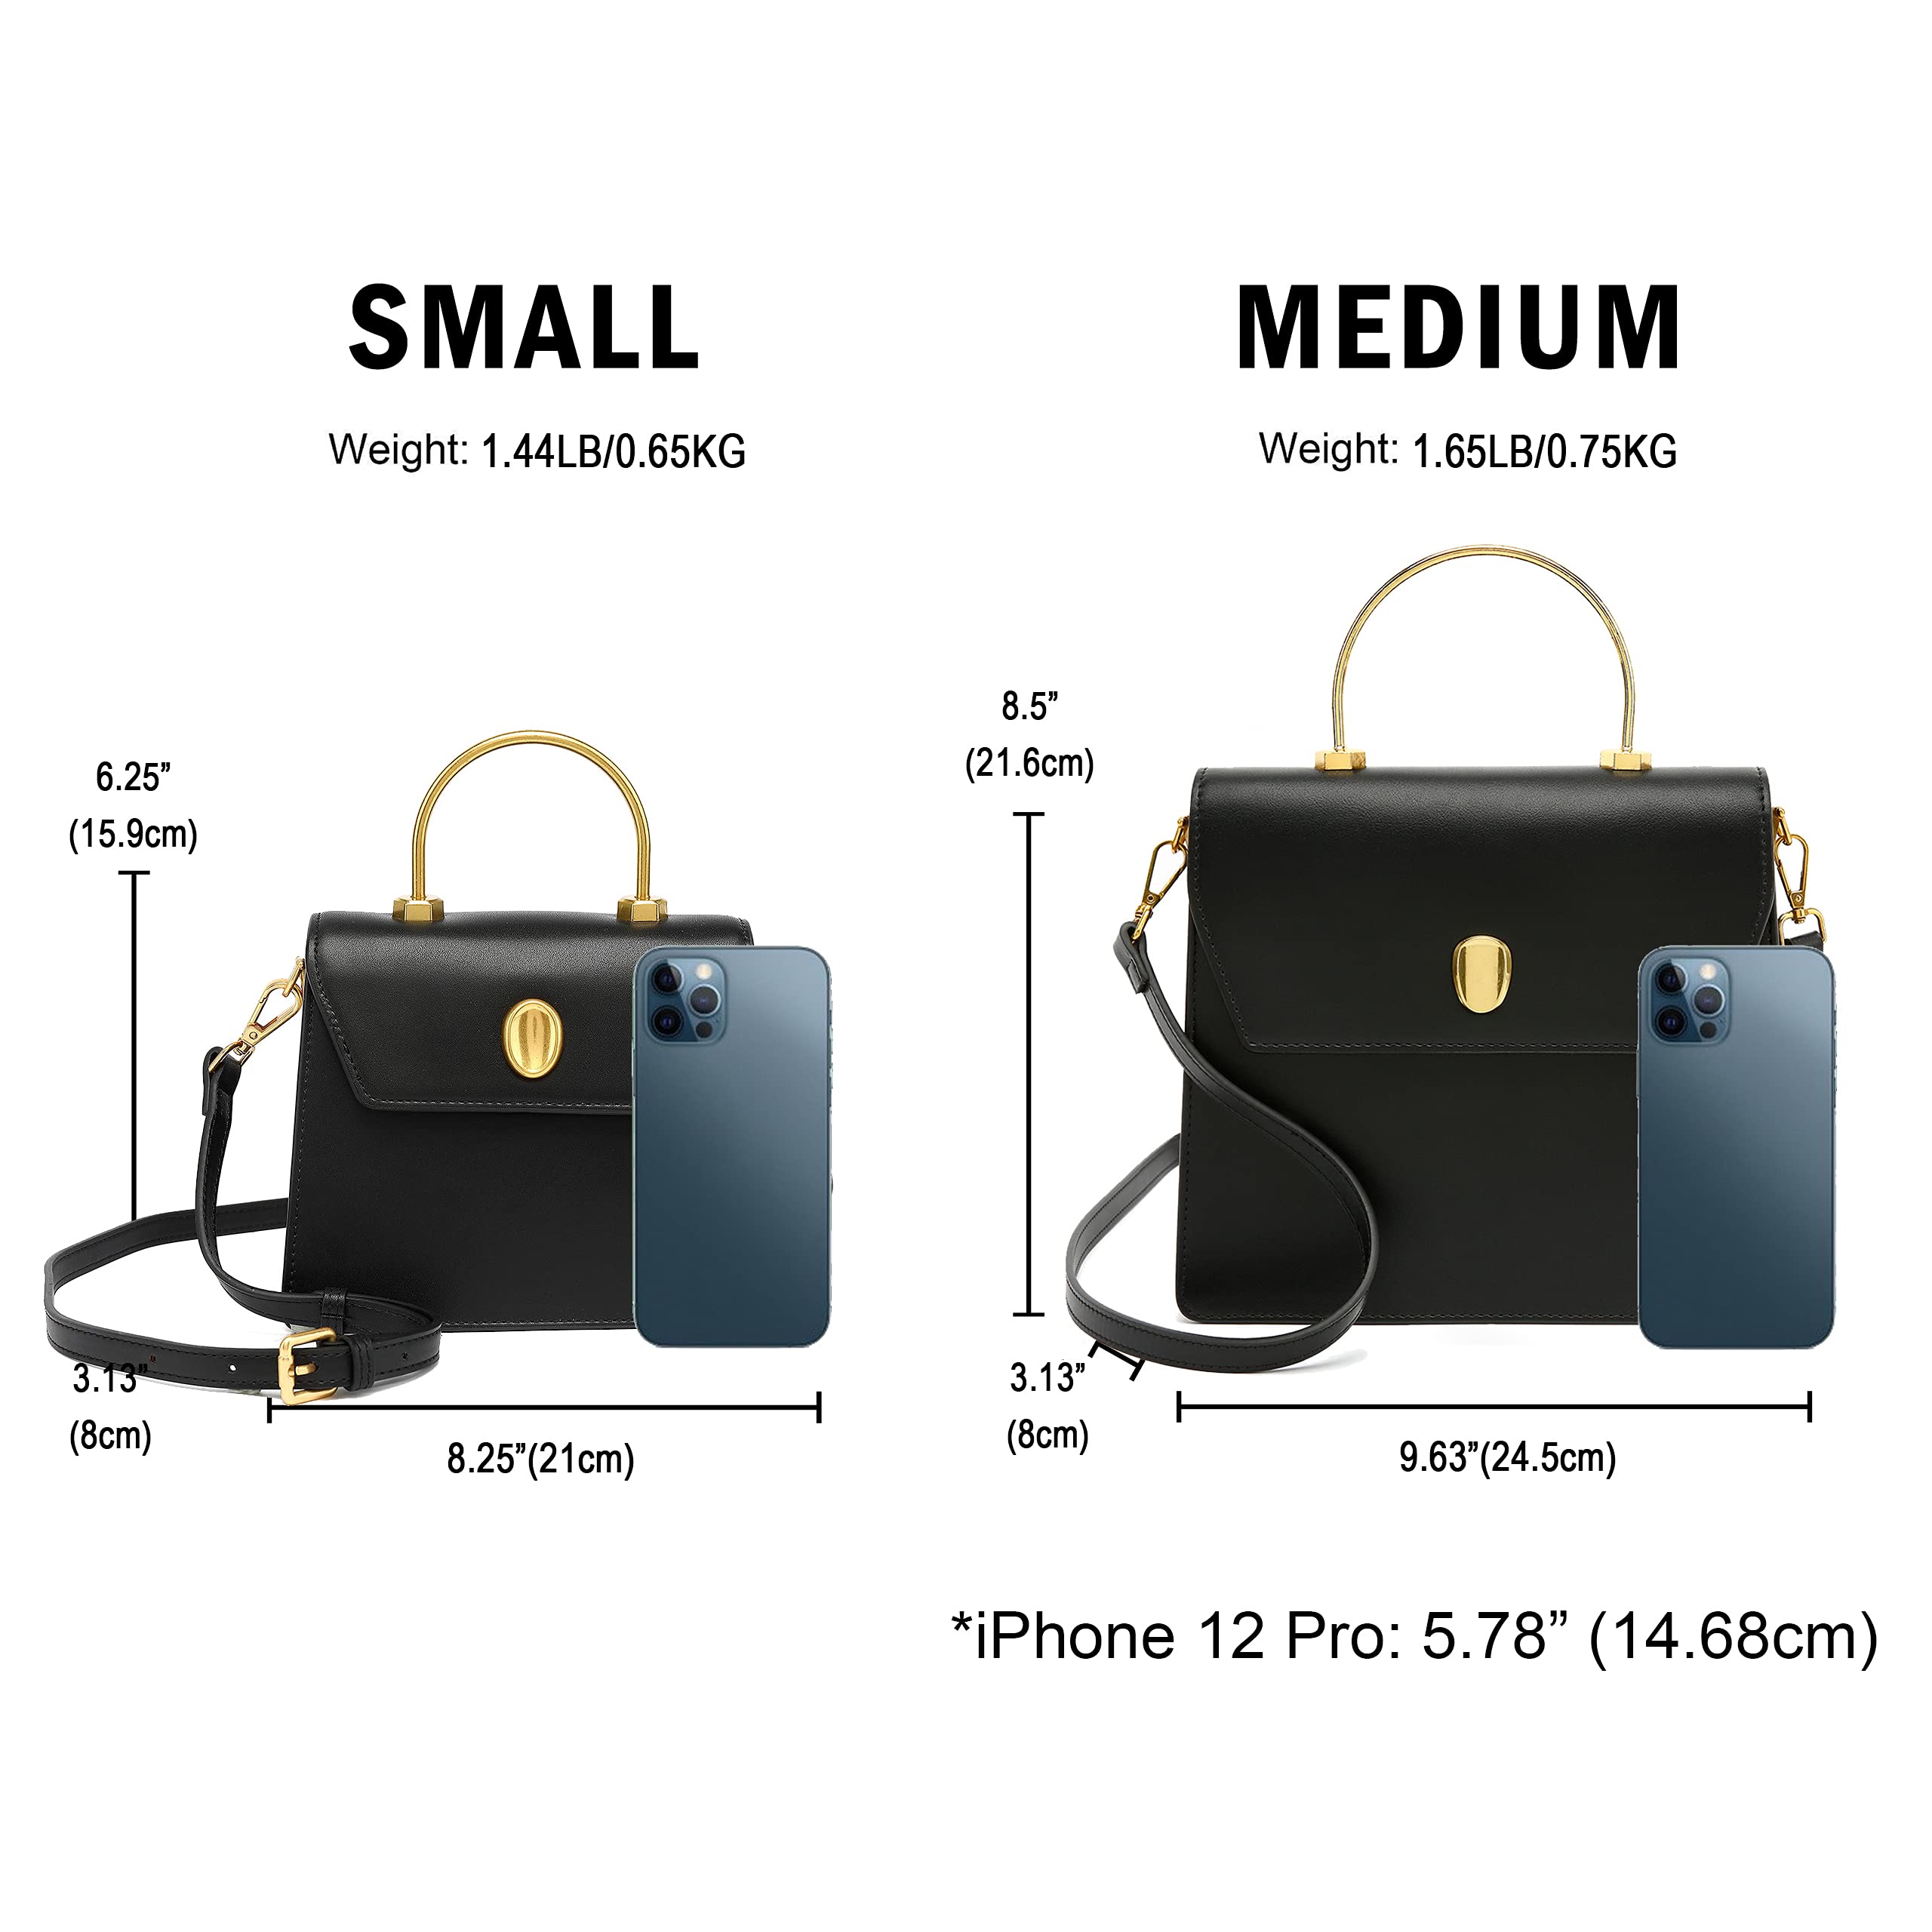 Scarleton Gold Top Handle Satchel Purses for Women, Handbags for Women, Crossbody Bags for Women, Shoulder Bag Purse Mini, H208401 - Black